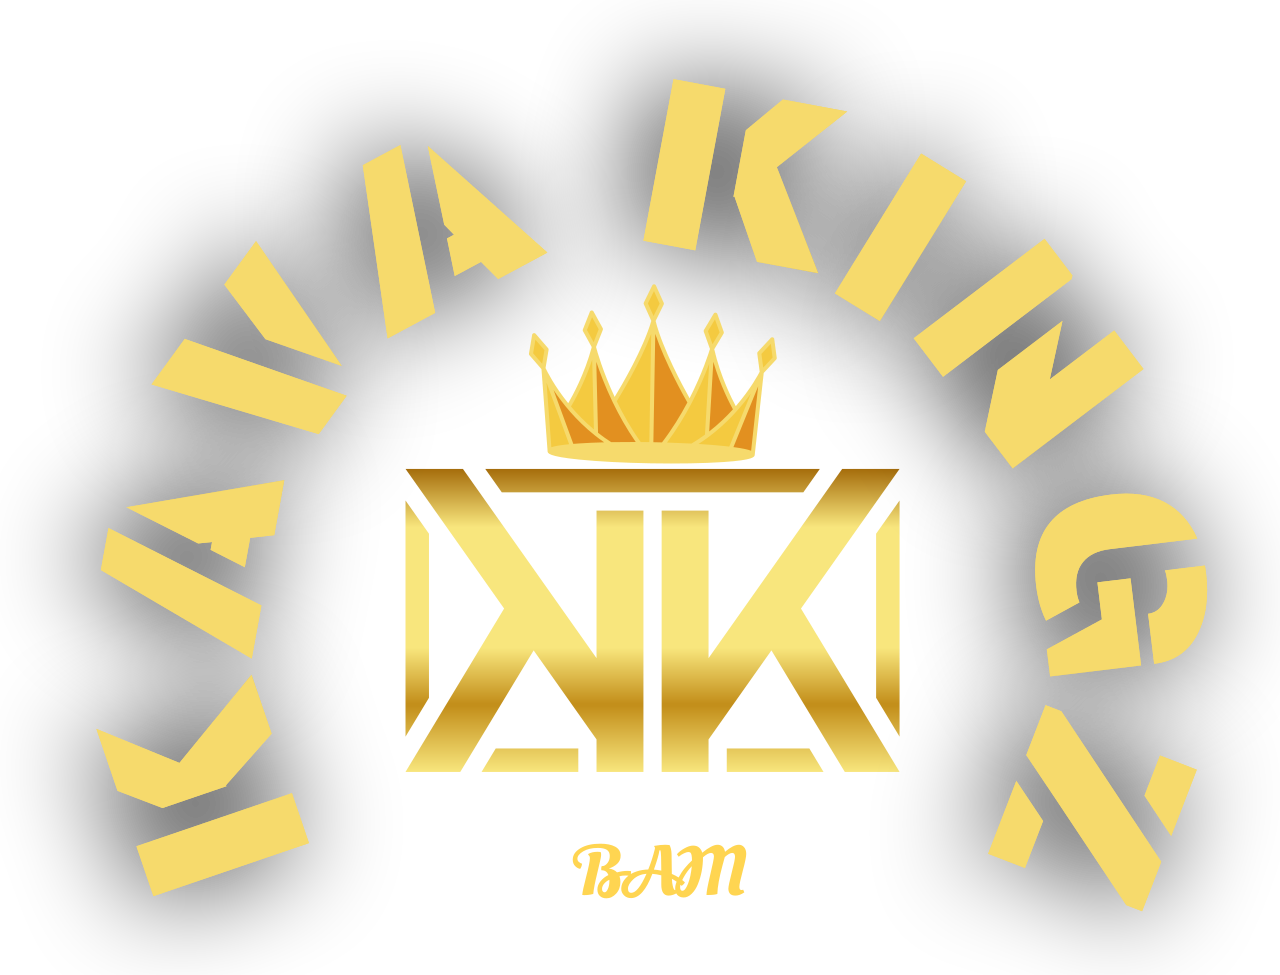 KAVA KINGZ's logo